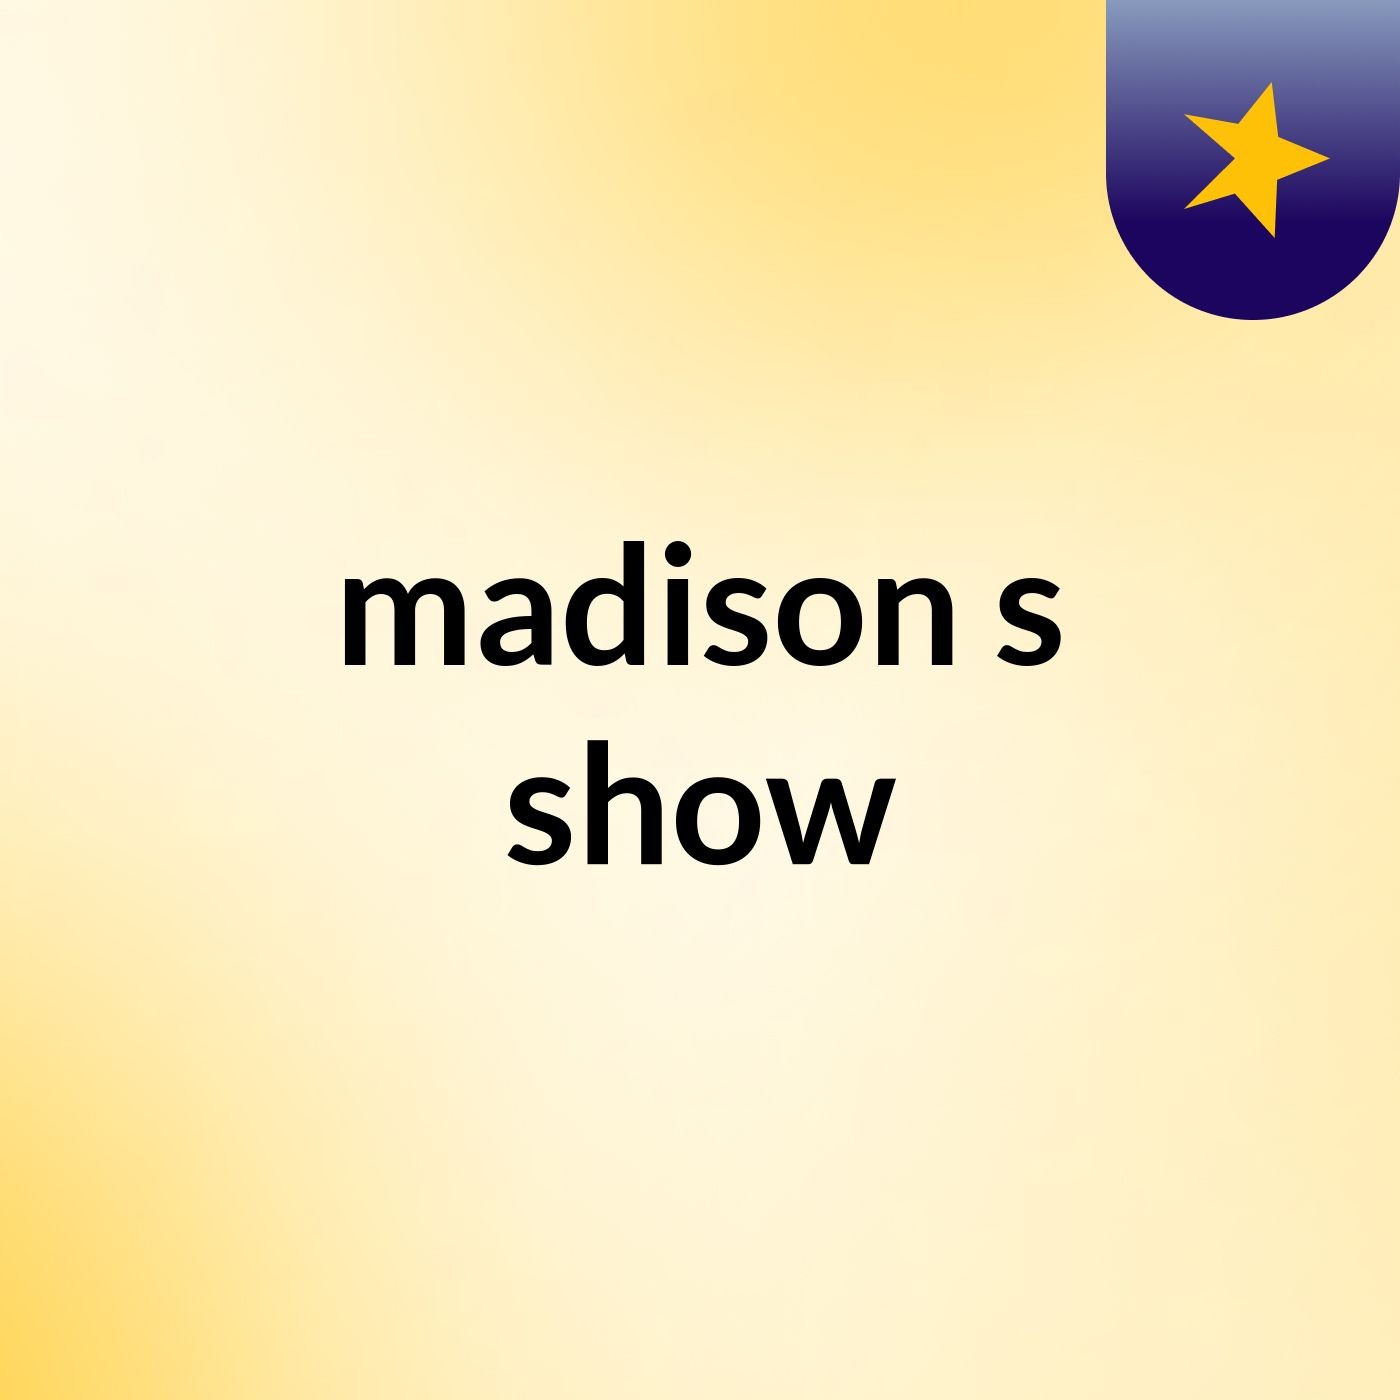 madison's show